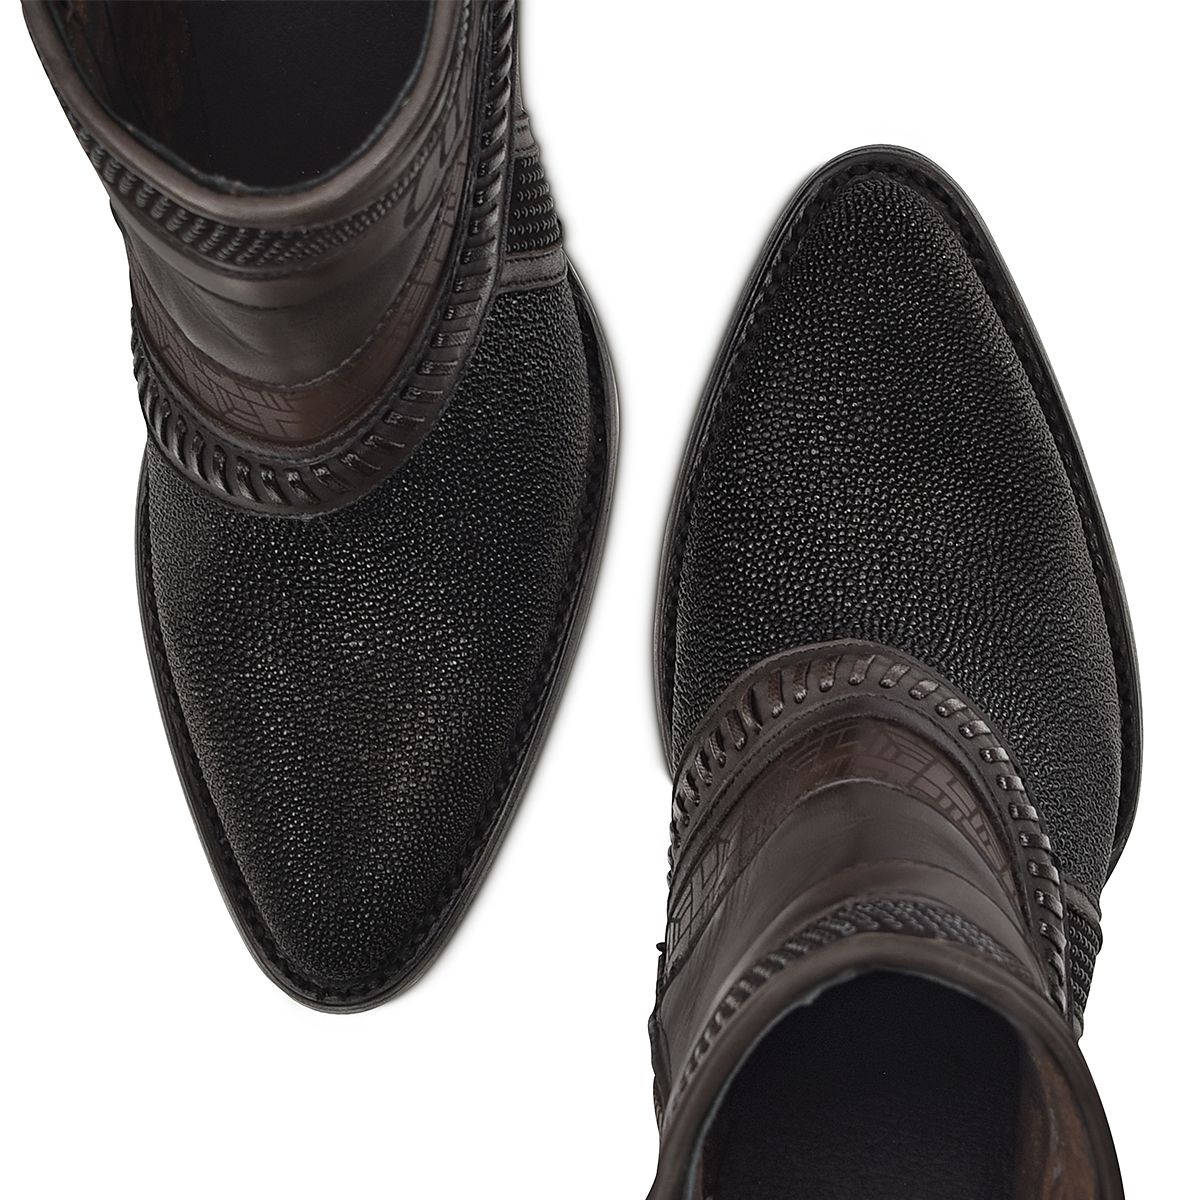 3F86MA - Cuadra black fashion Paris Texas stingray ankle boots for women-CUADRA-Kuet-Cuadra-Boots